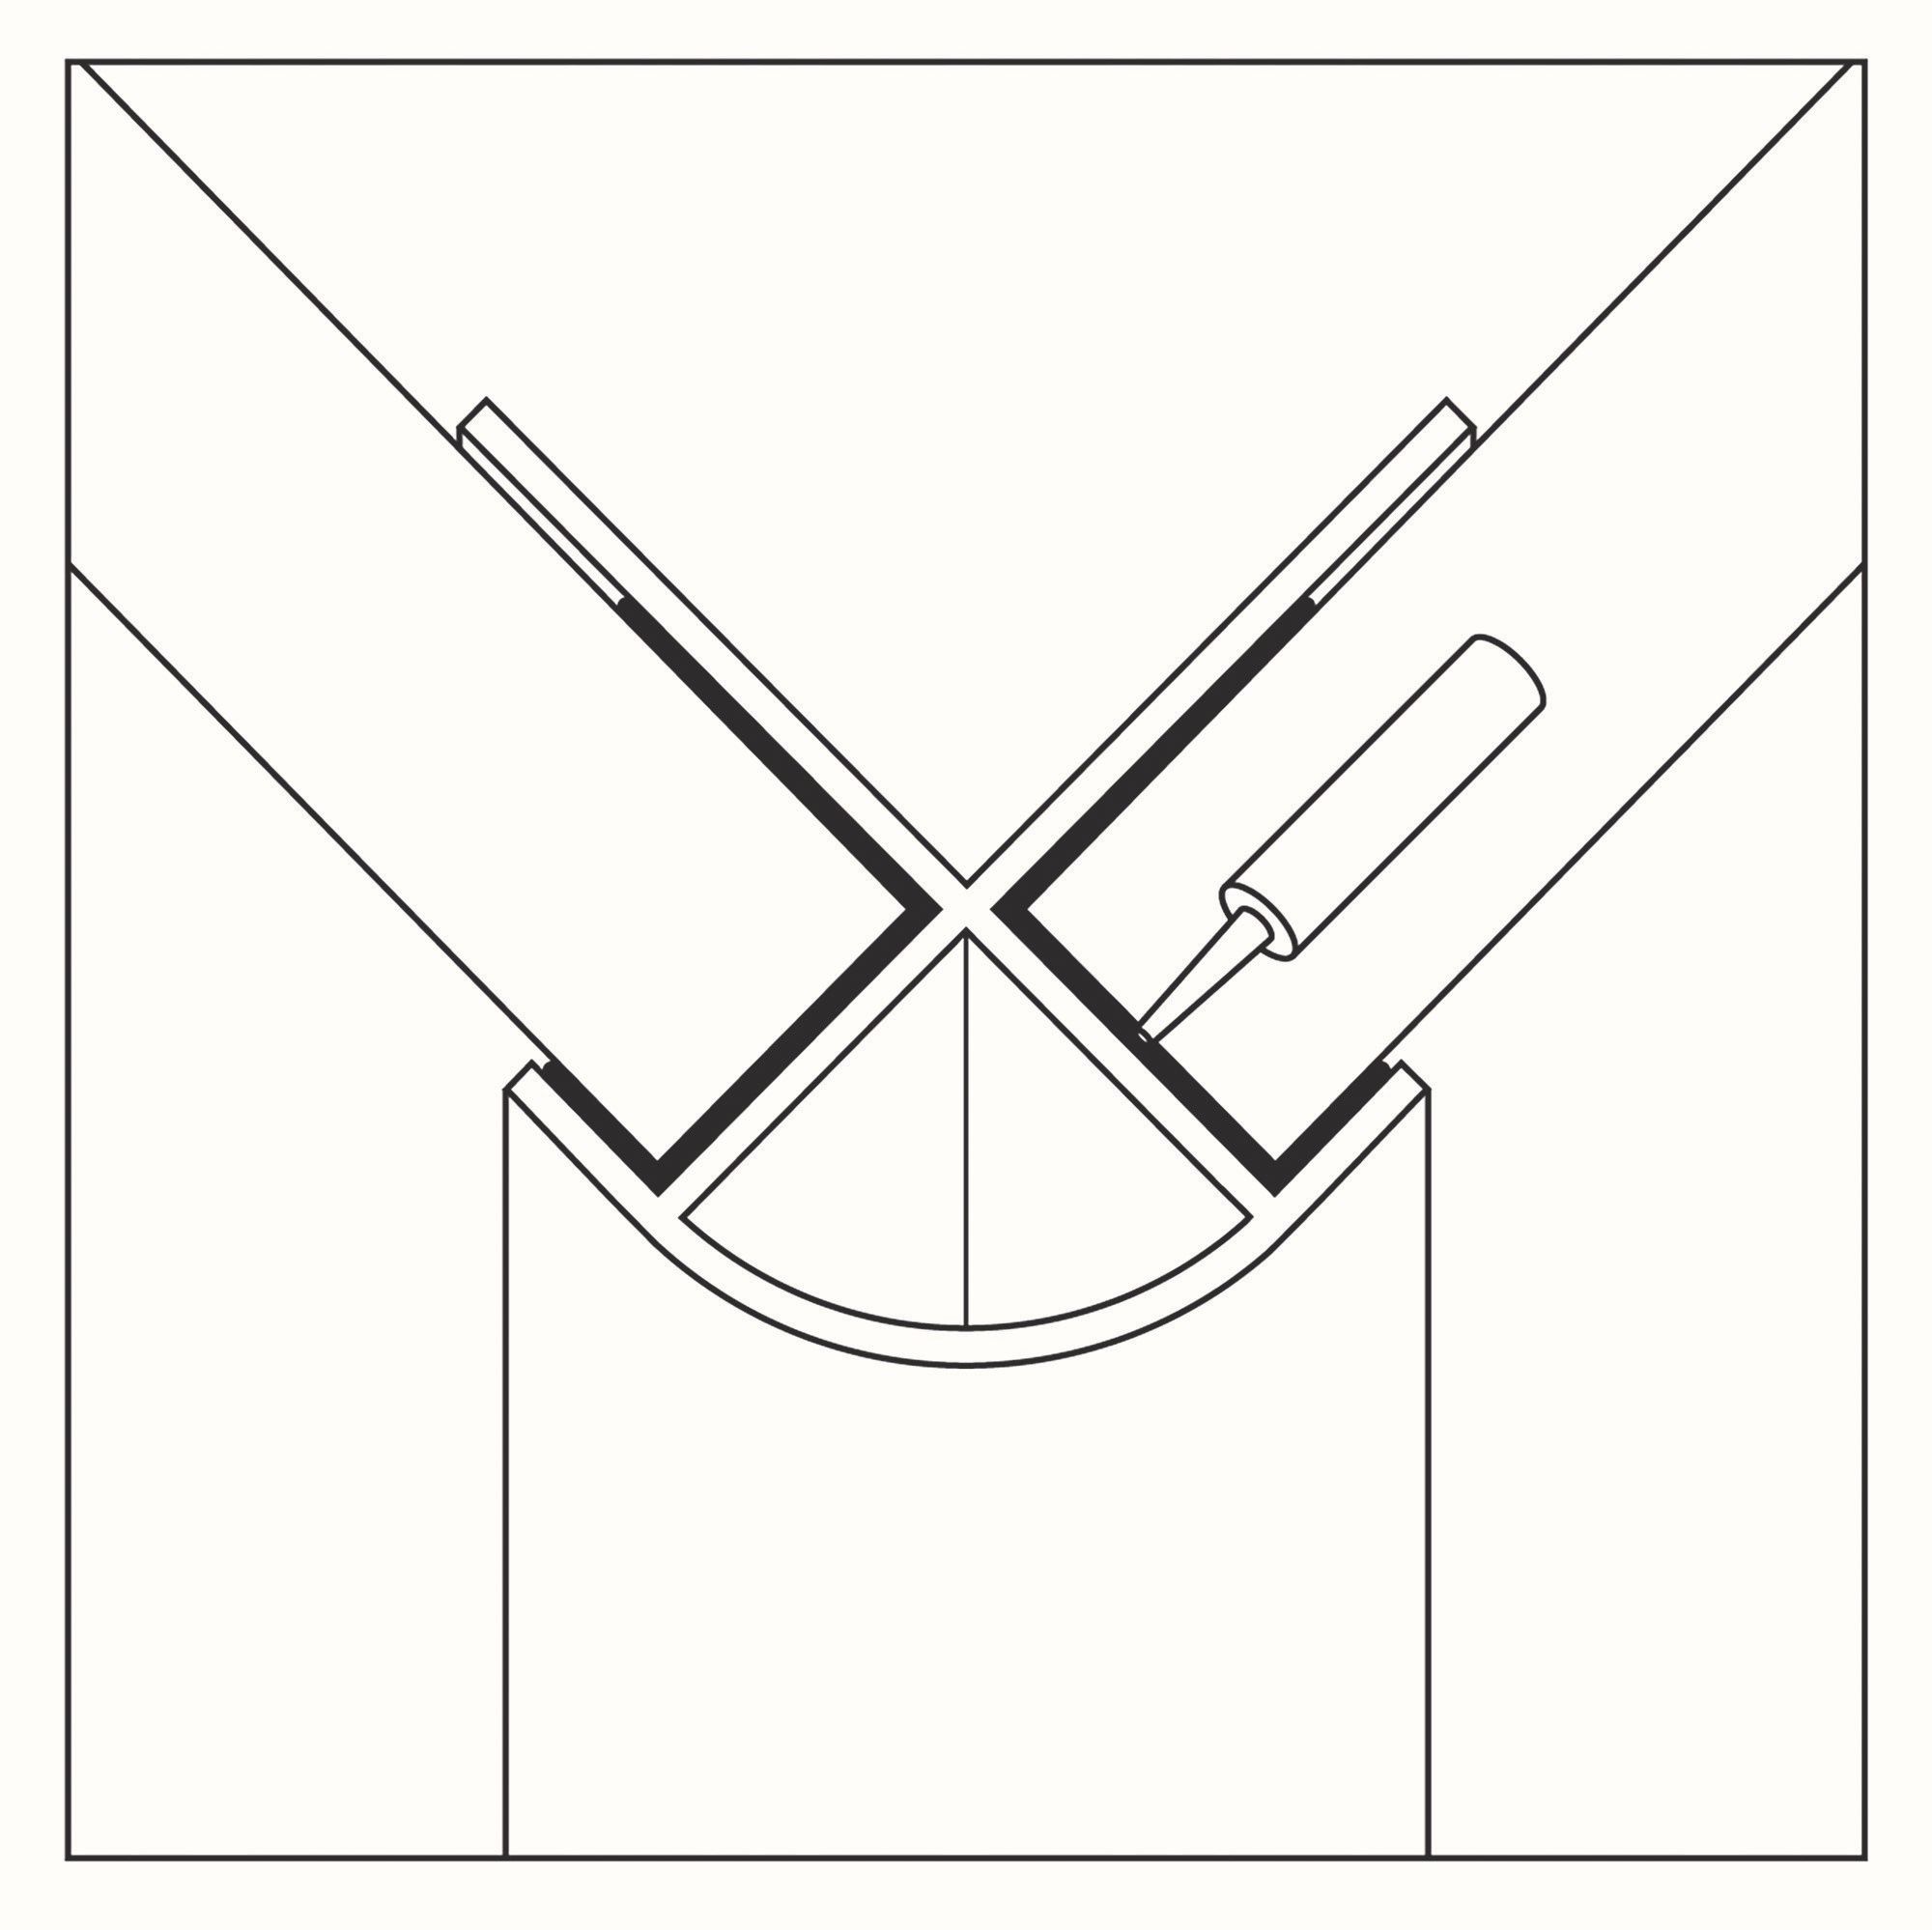 Stylepanel White Straight Panel external corner joint, (W)11mm (T)30mm